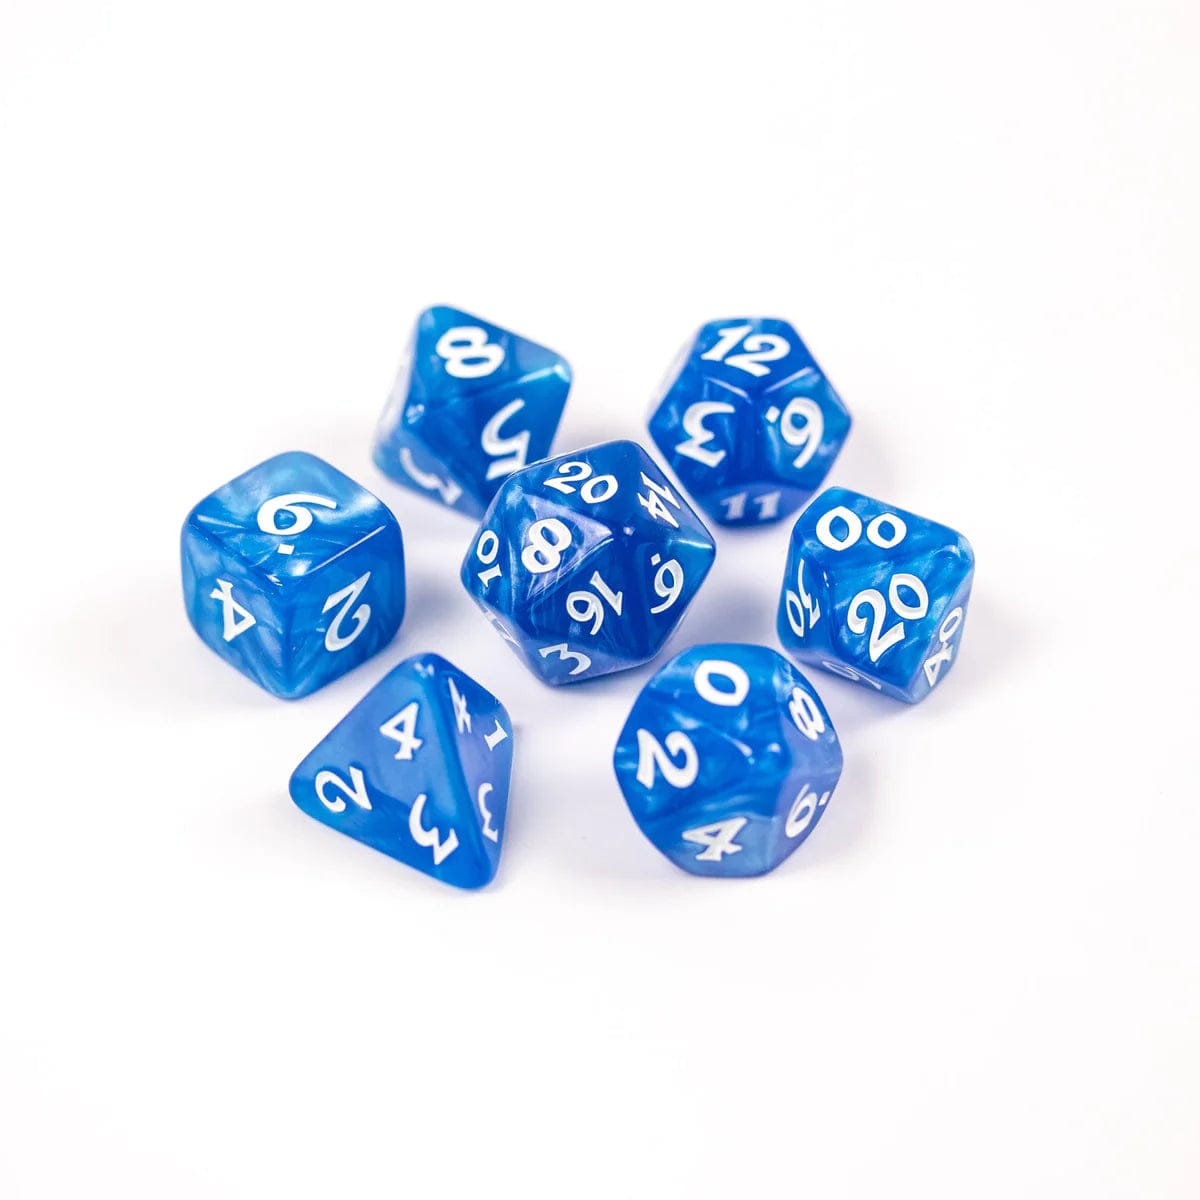 Die Hard Dice: 7pc RPG Set - Elessia Essentials, Blue with White